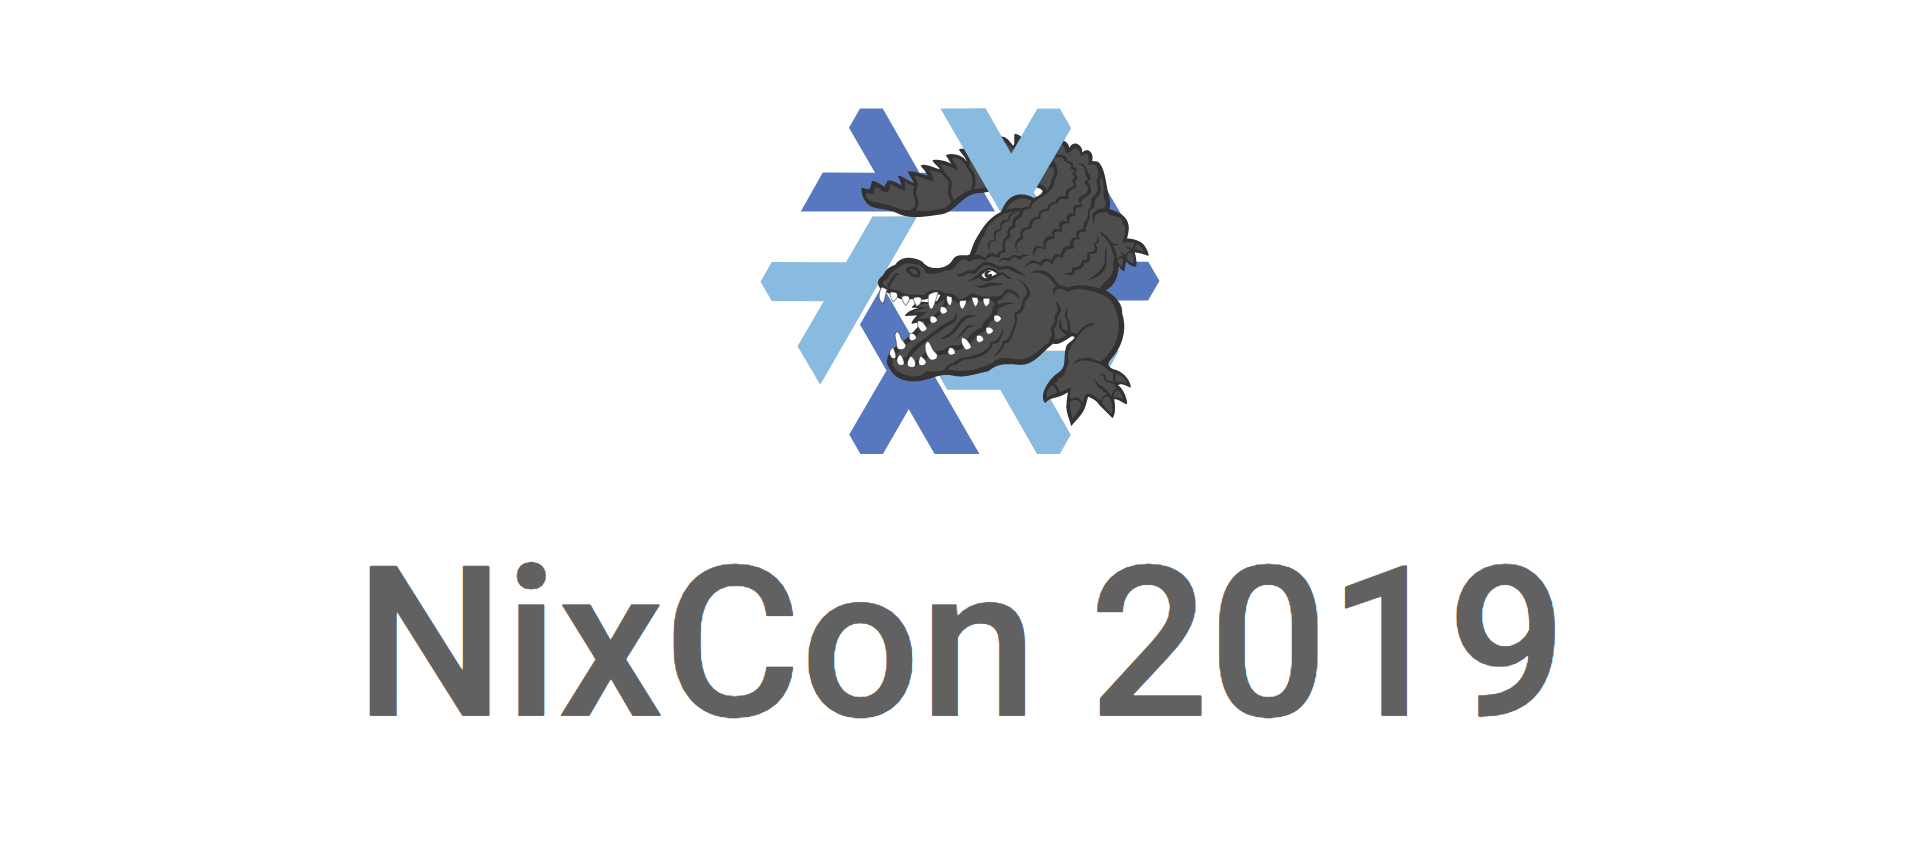 NixCon 2019 featured image